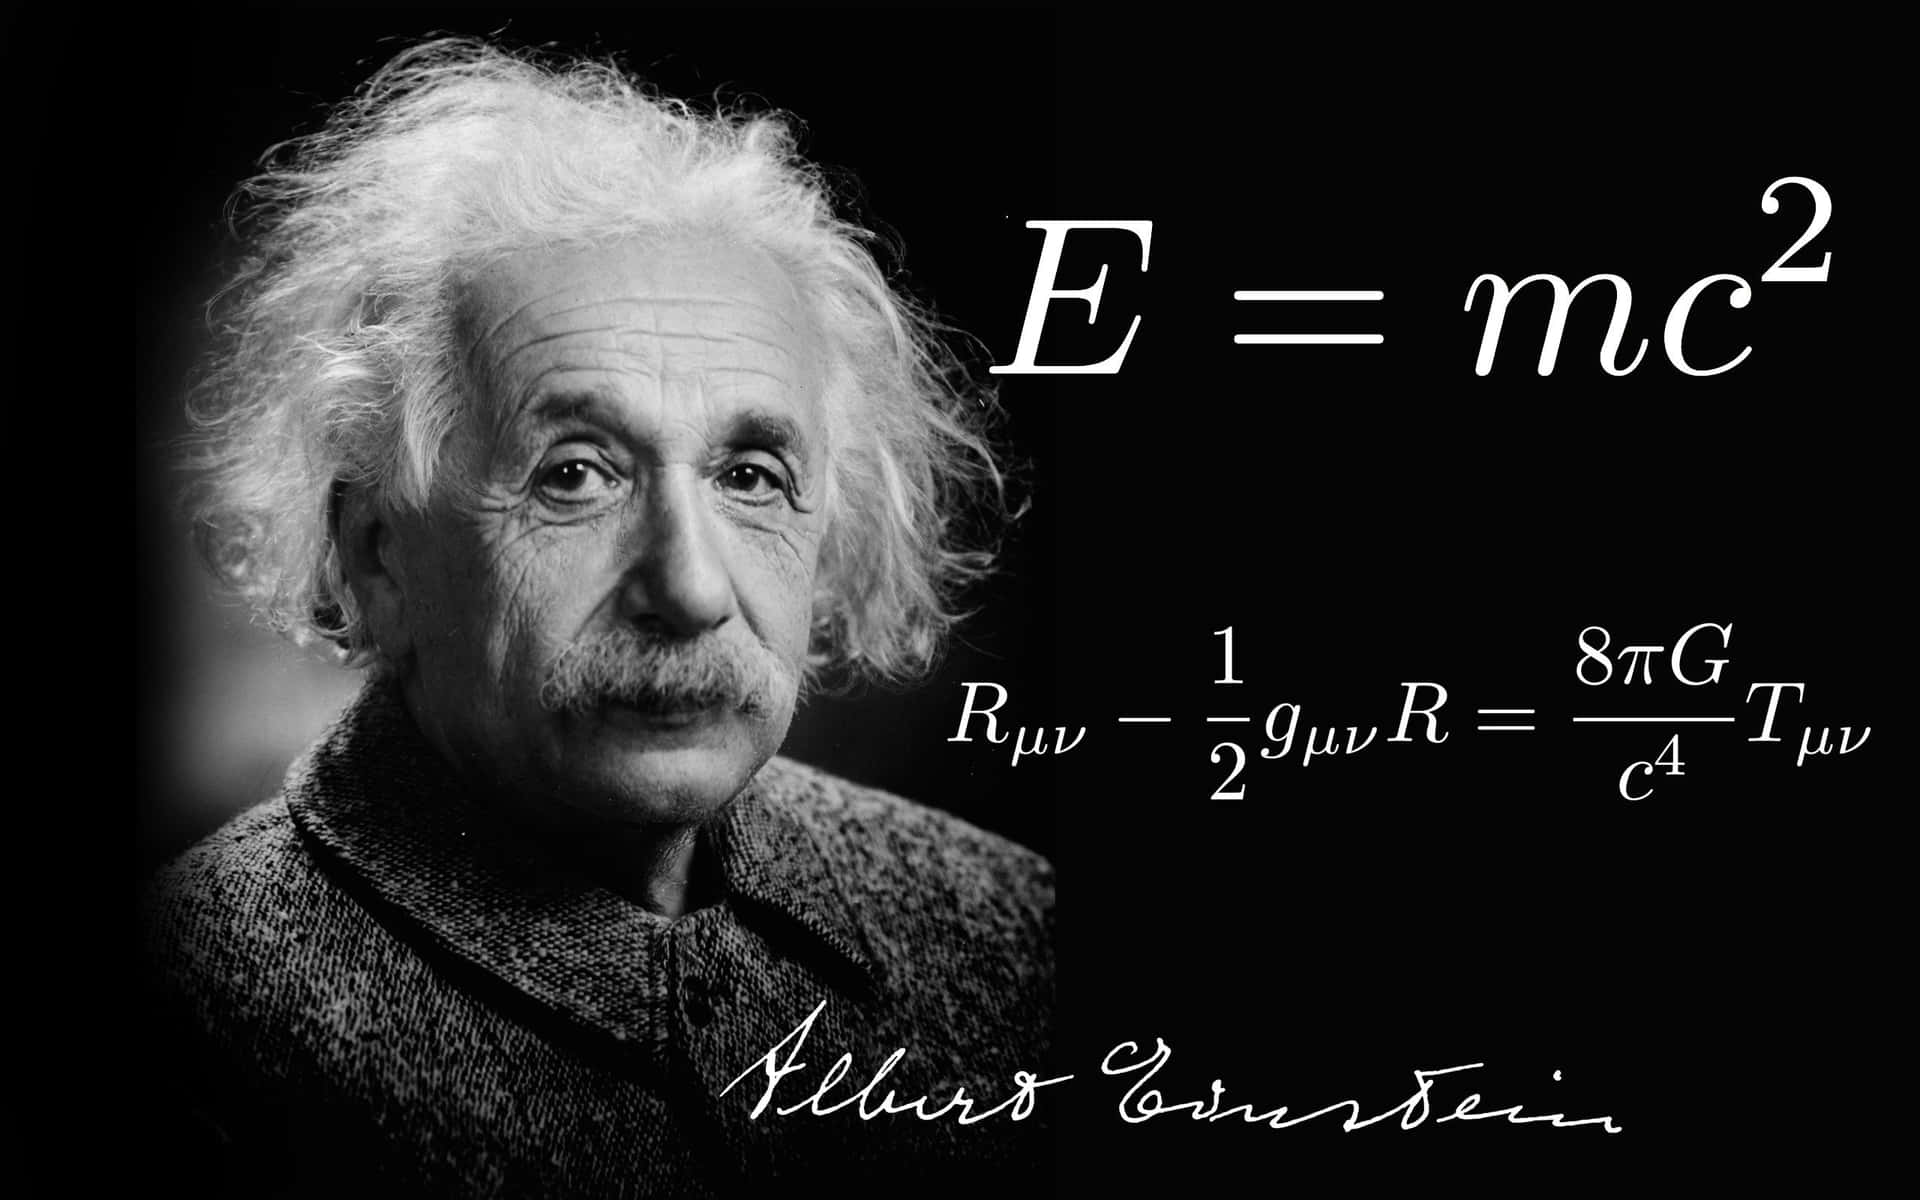 A portrait of the renowned physicist Albert Einstein